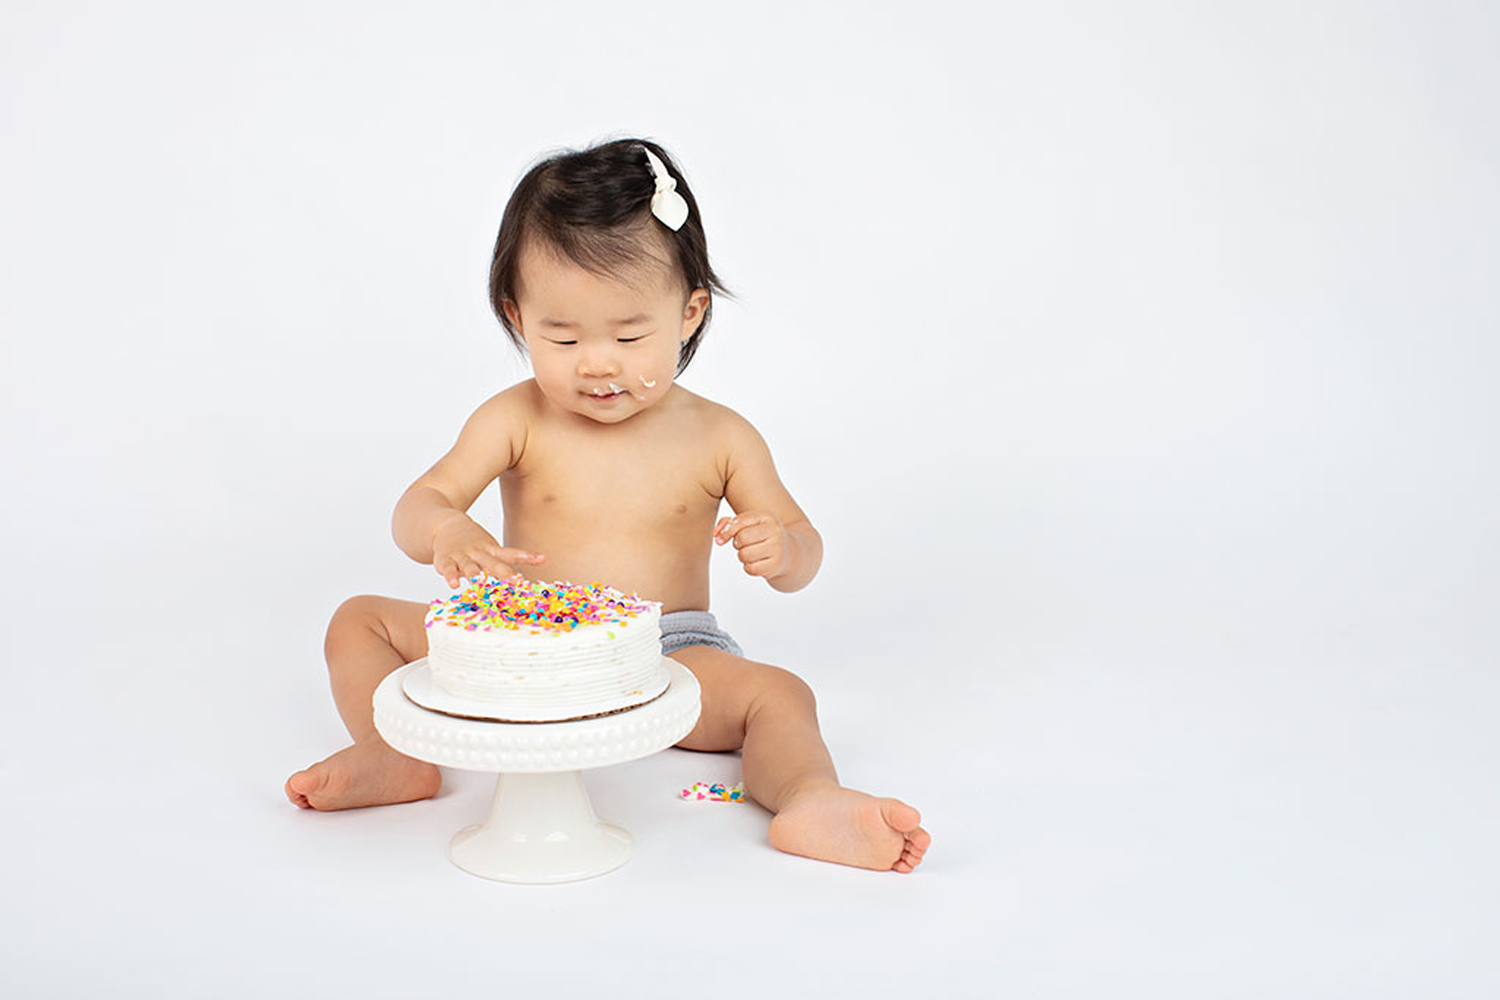 A baby eats their birthday cake.